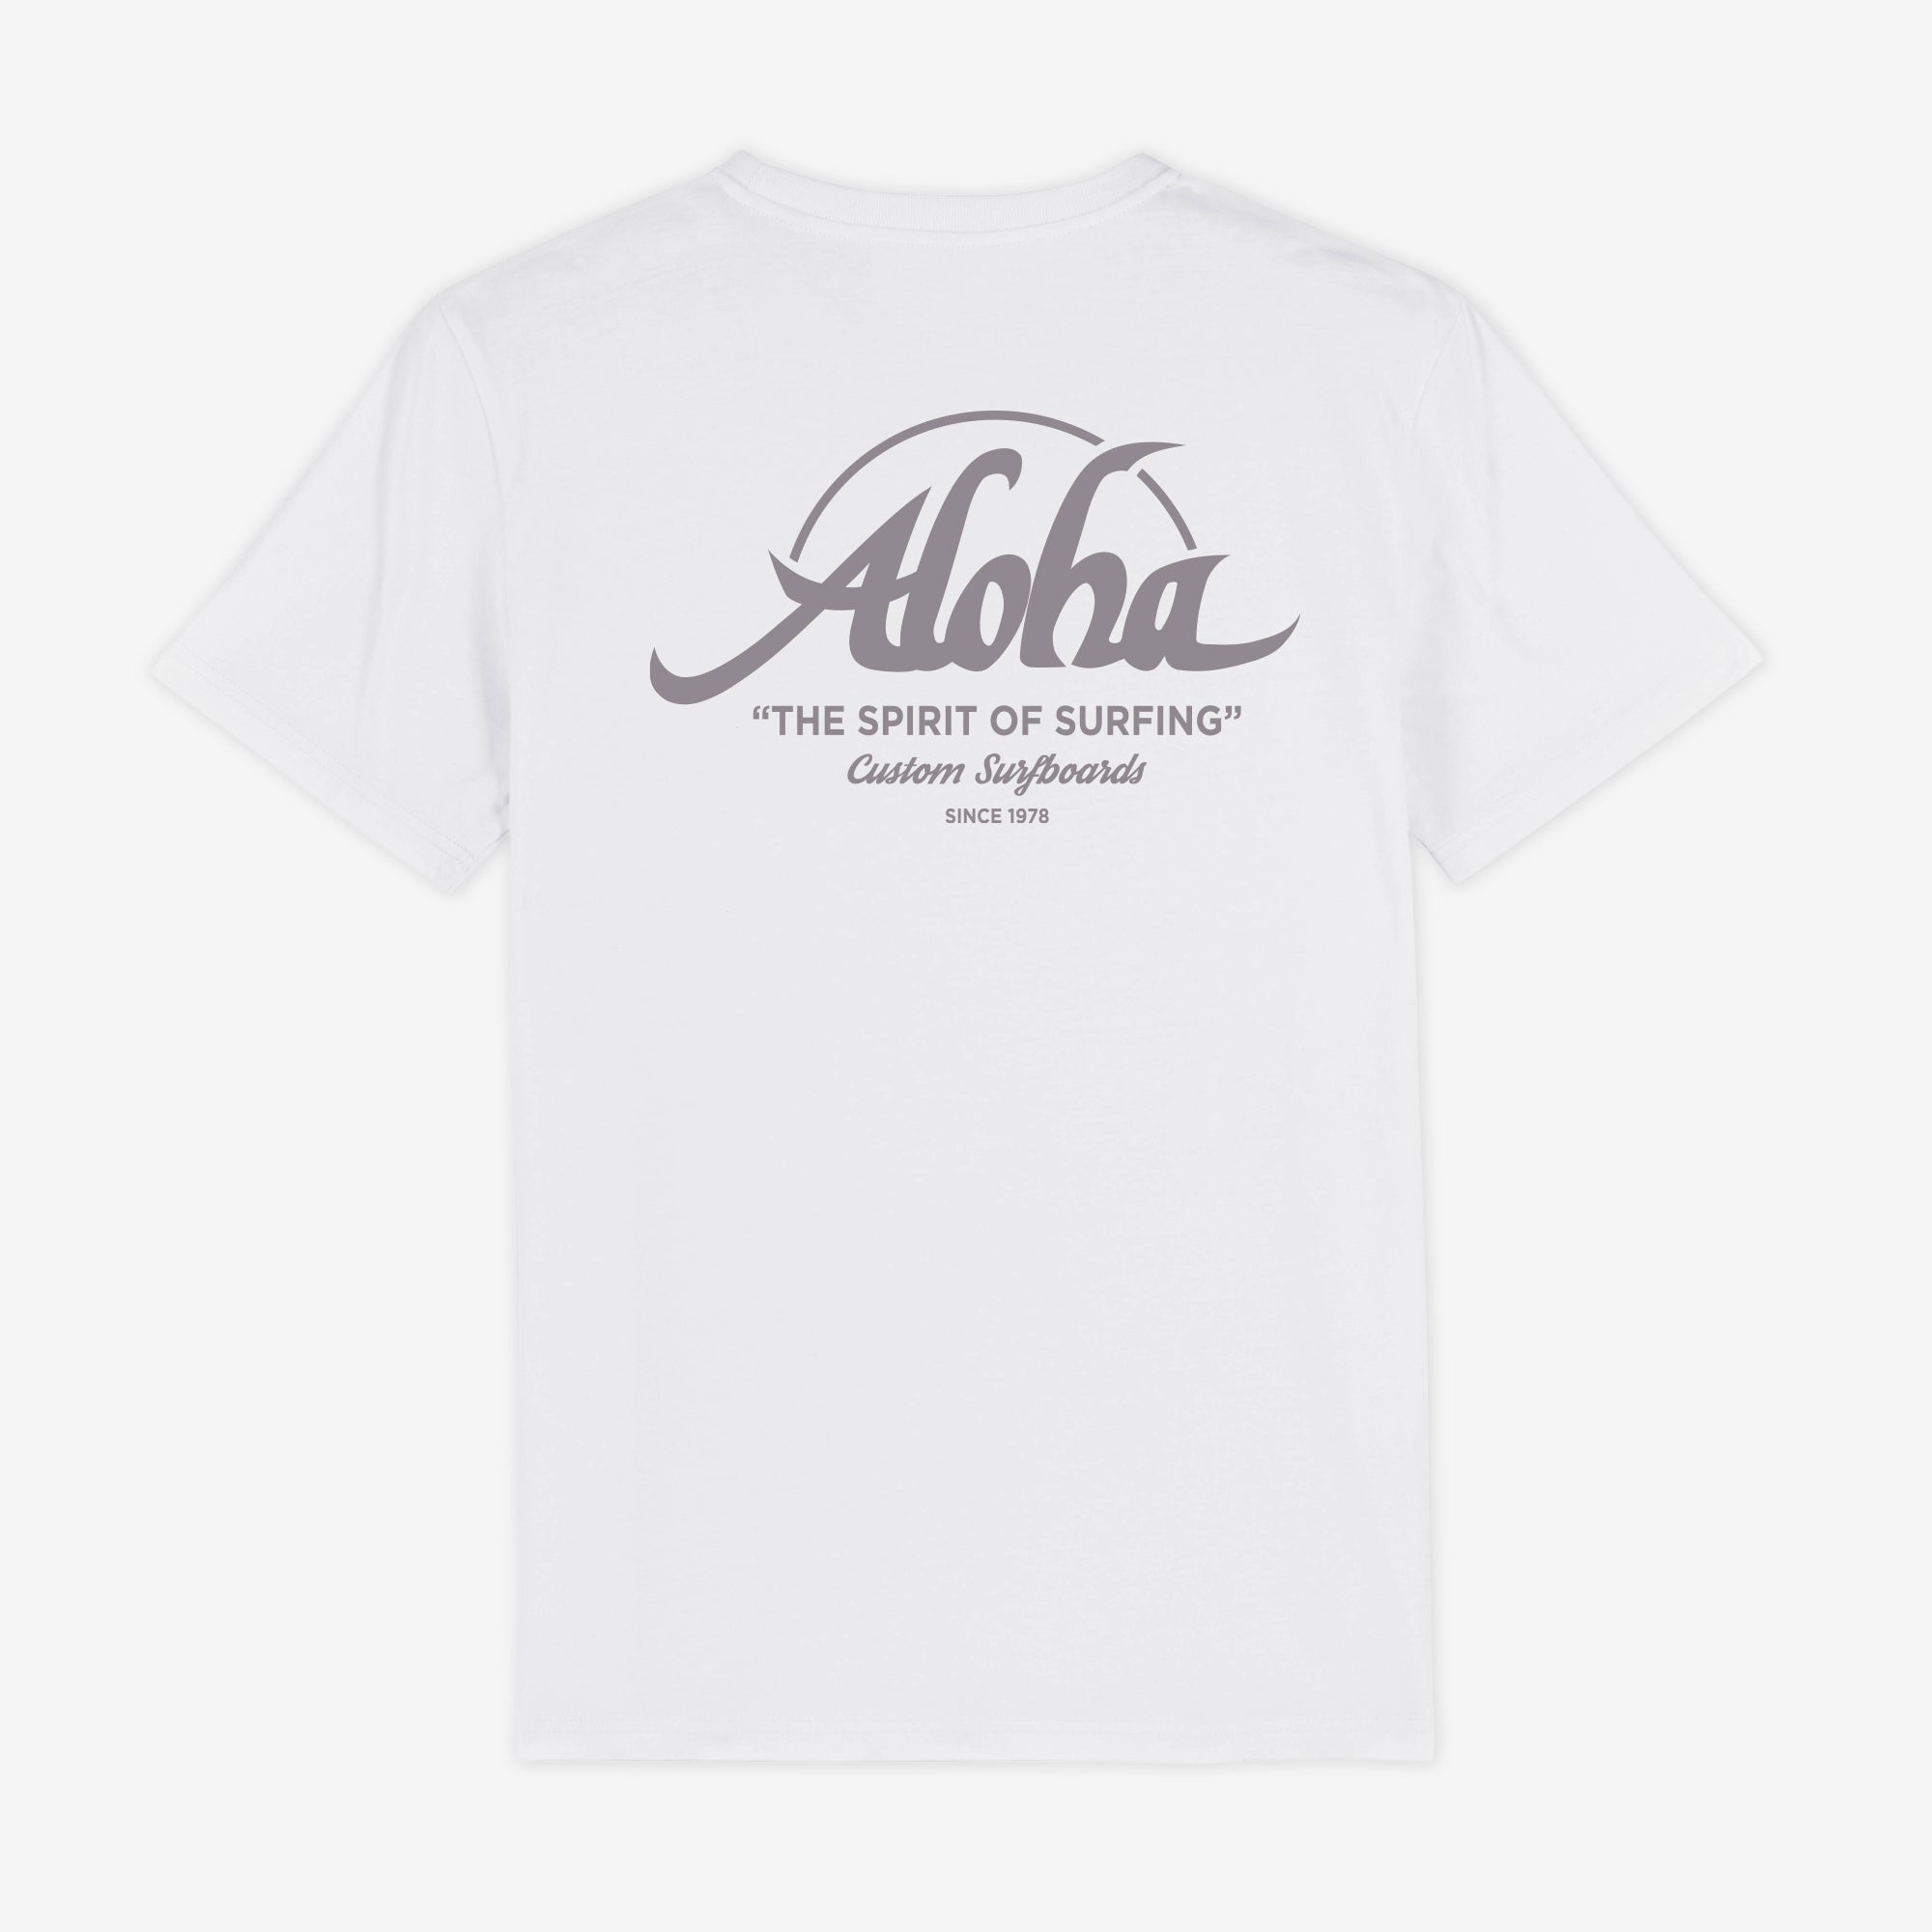 Aloha Custom Surfboards T-Shirt - Unisex Short Sleeve Tee - White - ManGo Surfing